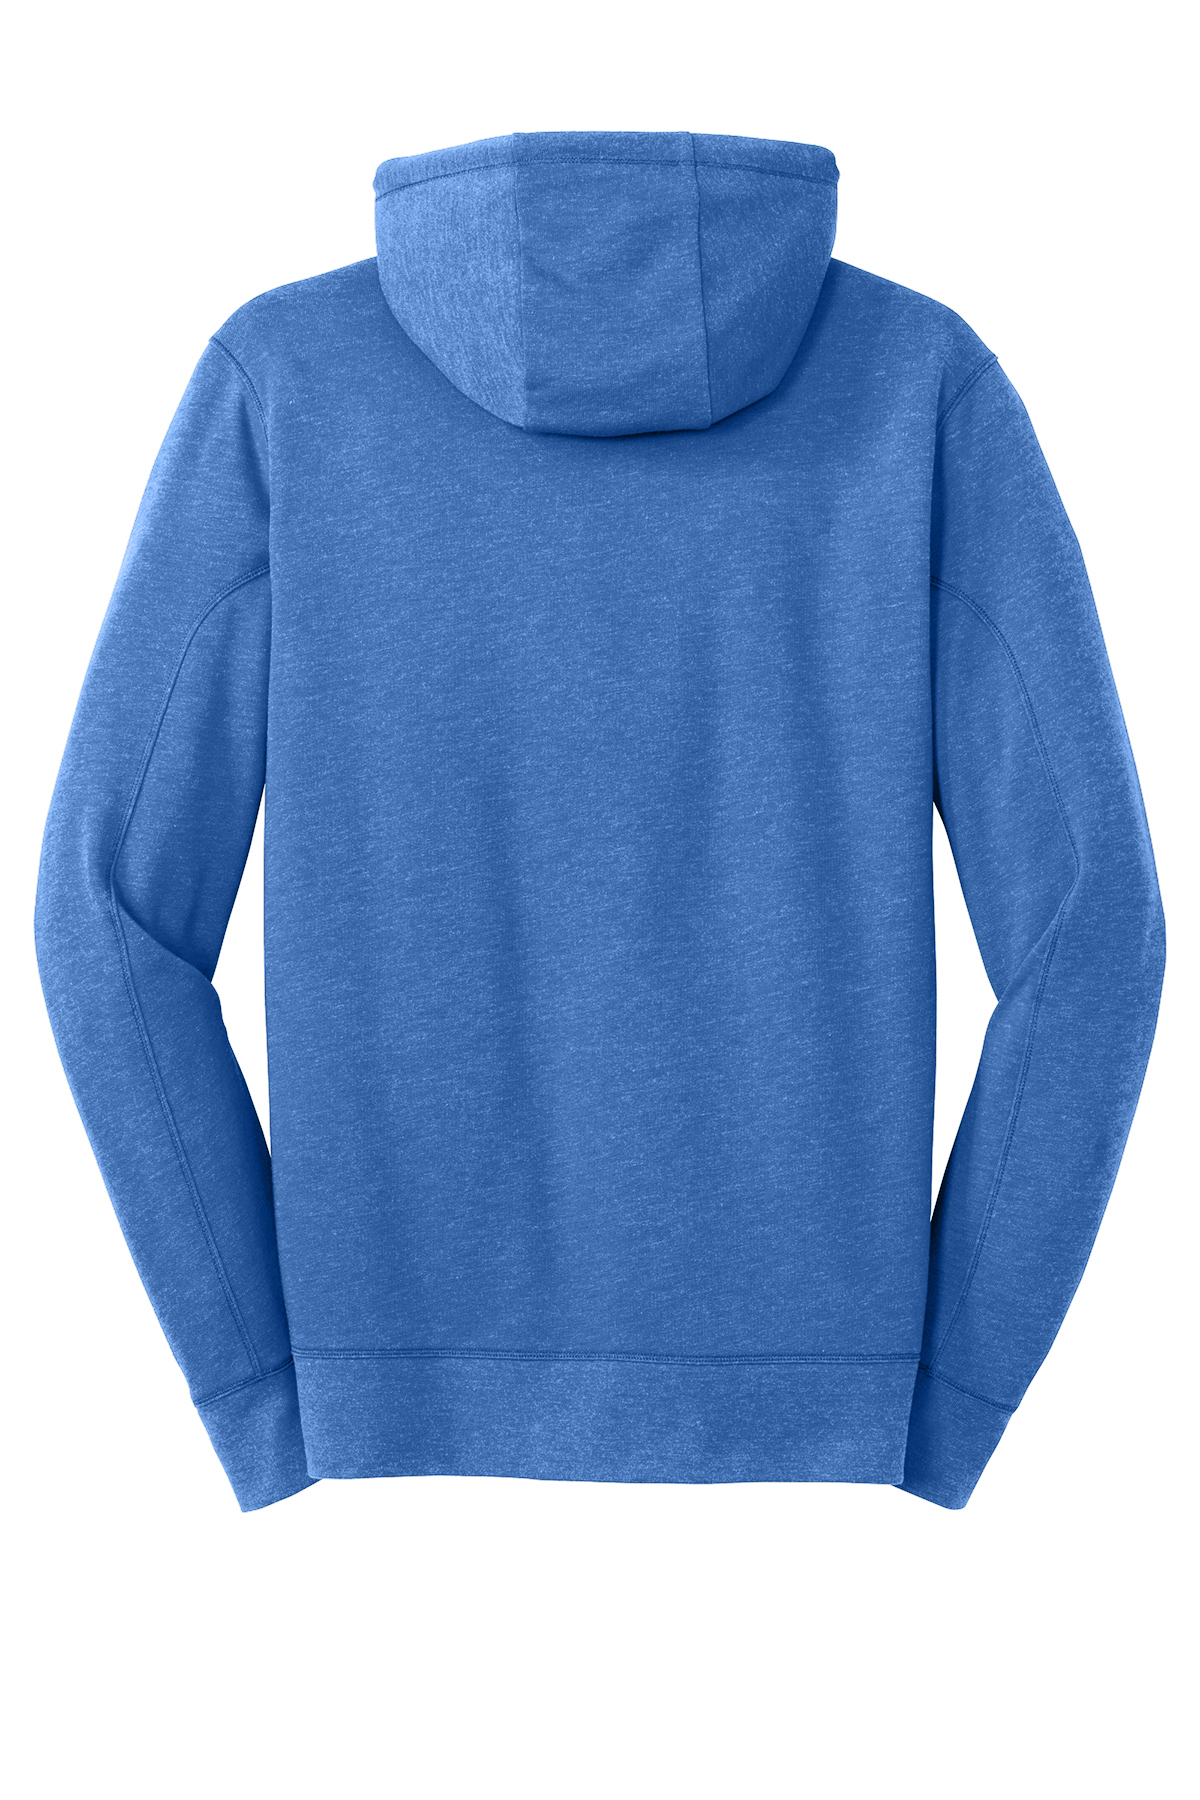 New Era Tri-Blend Fleece Full-Zip Hoodie | Product | SanMar